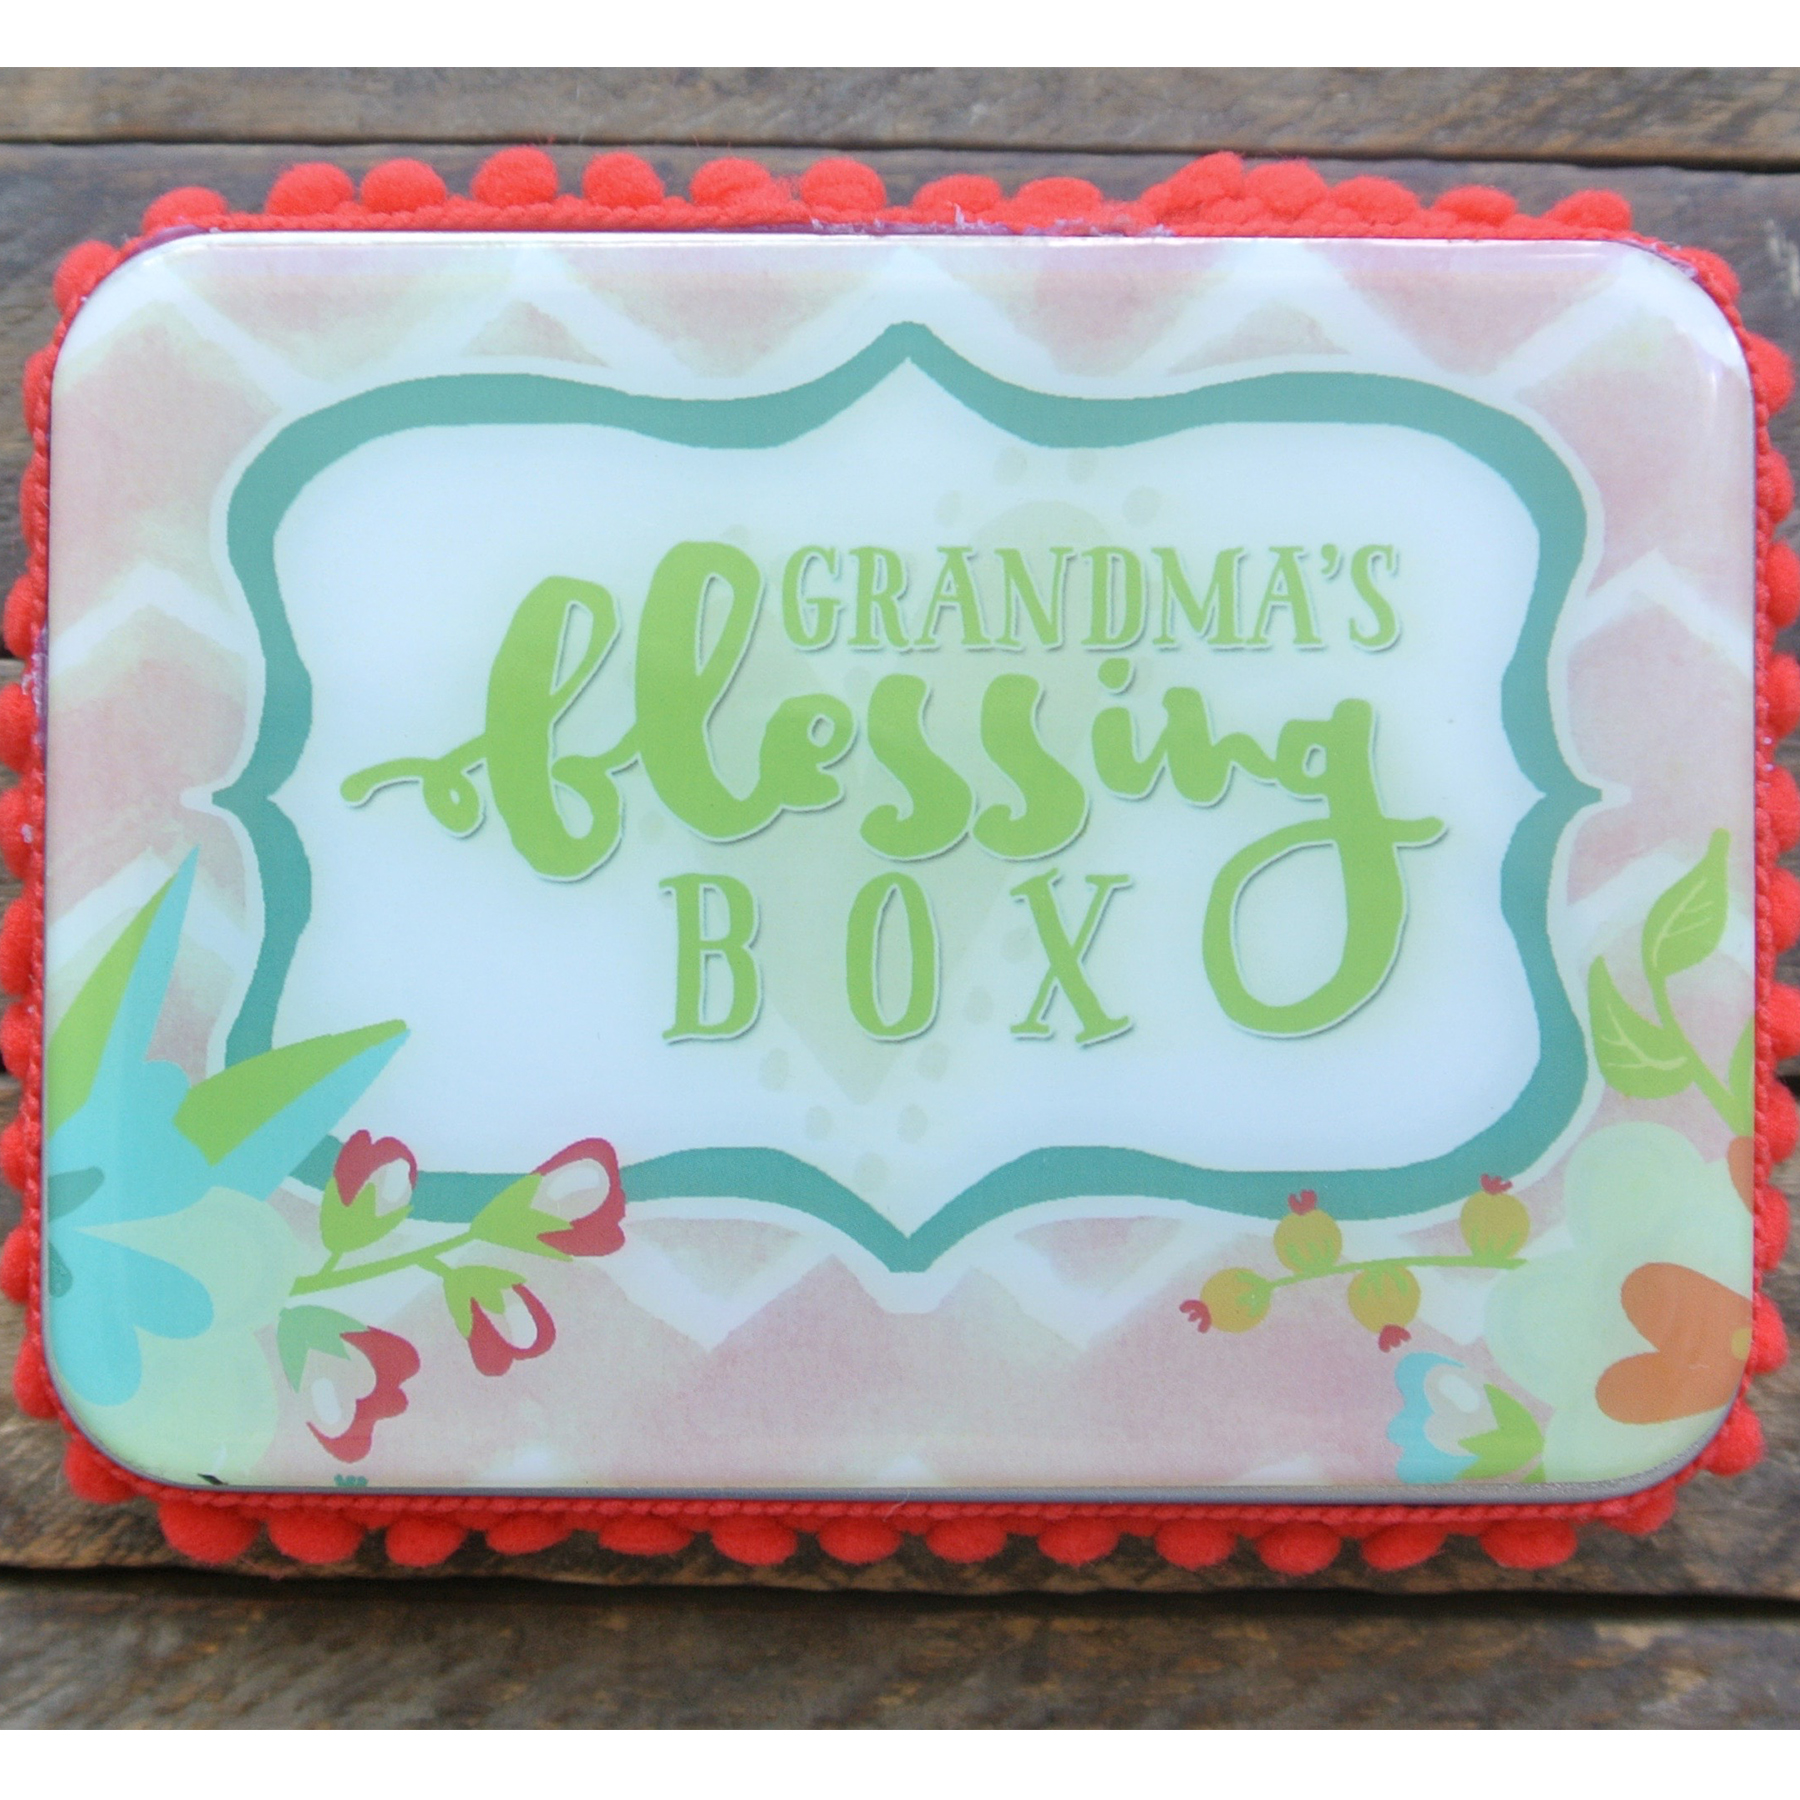 Grandma Blessing Box.jpg